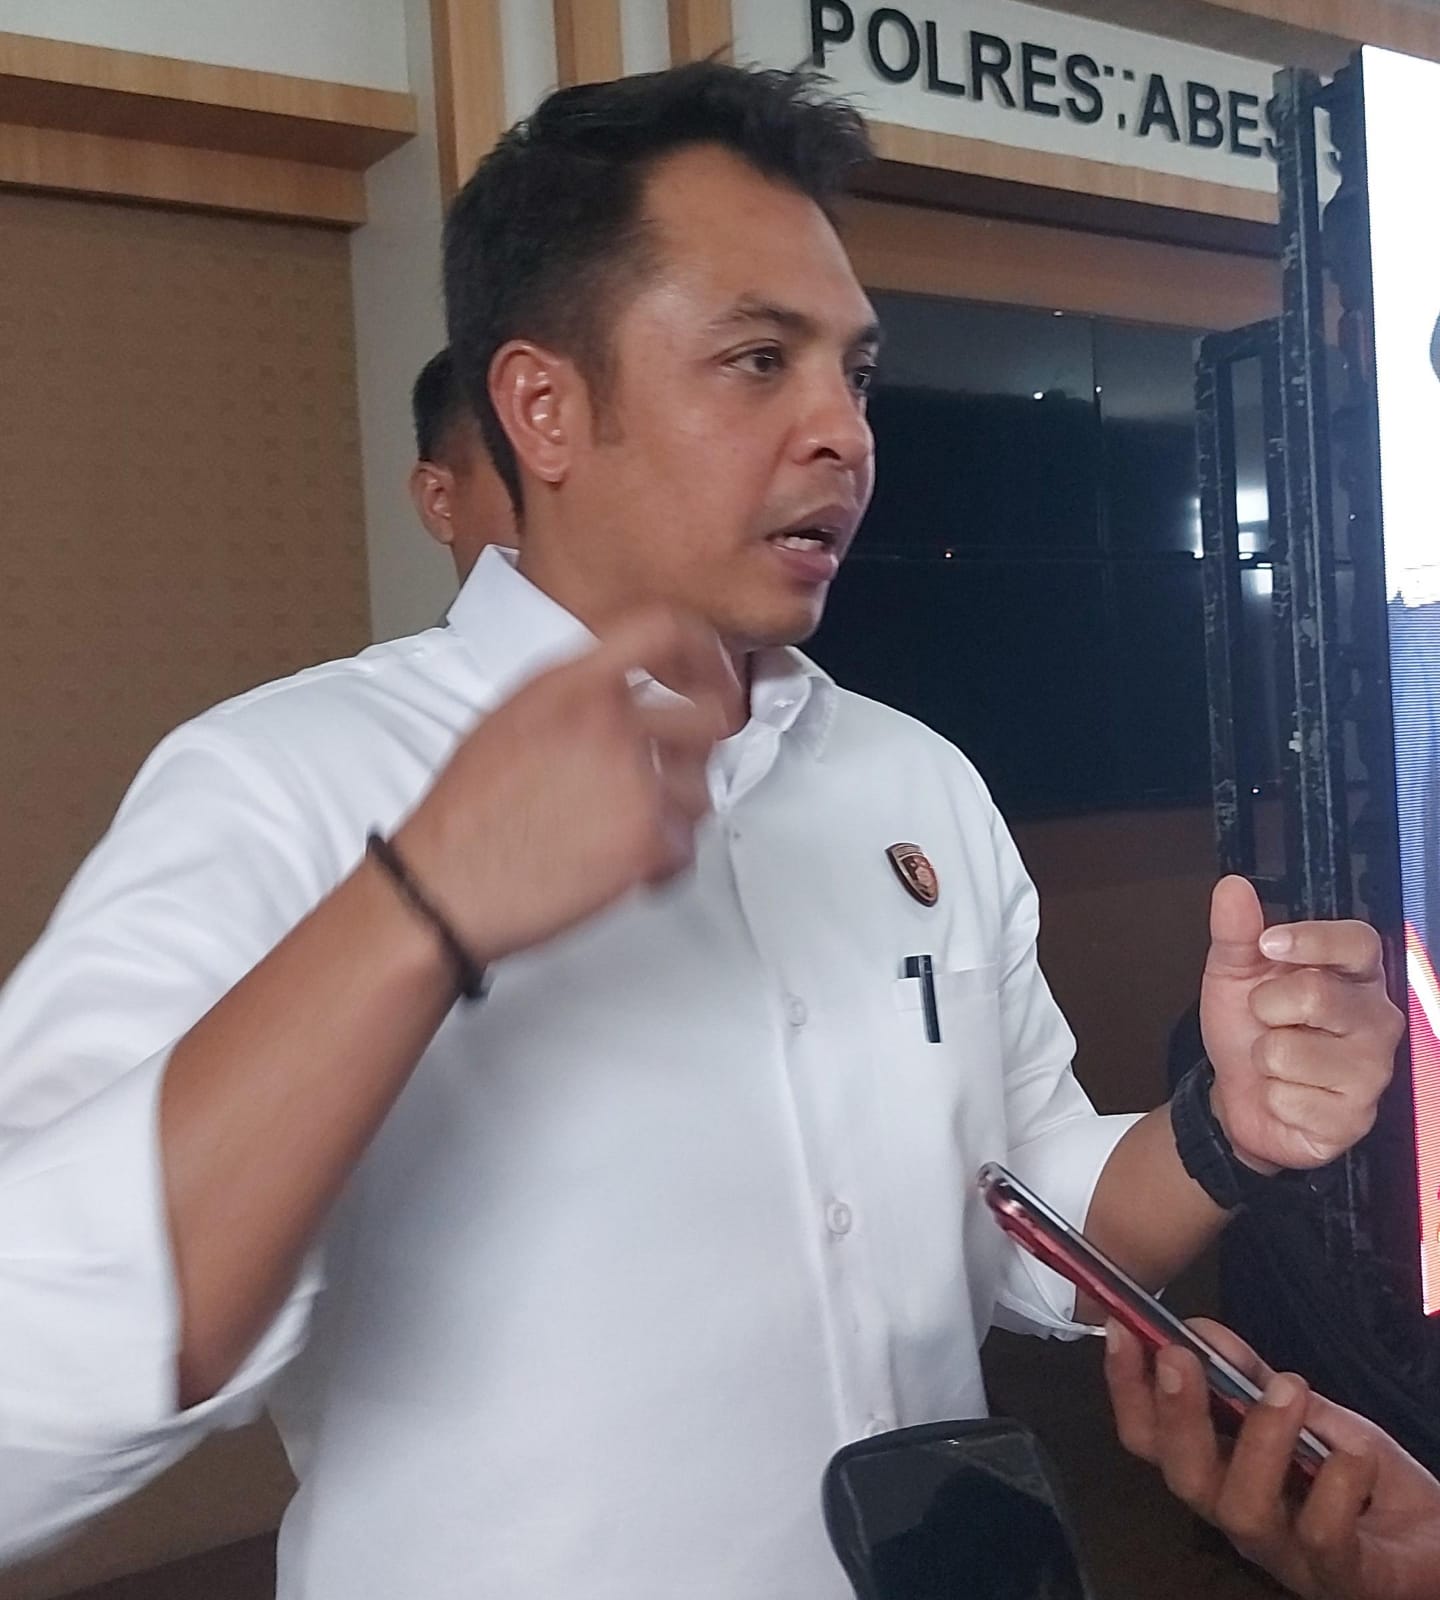 Polisi Sebut Legitimasi dan Pencarian Jati Diri Jadi Motif Tawuran di Surabaya